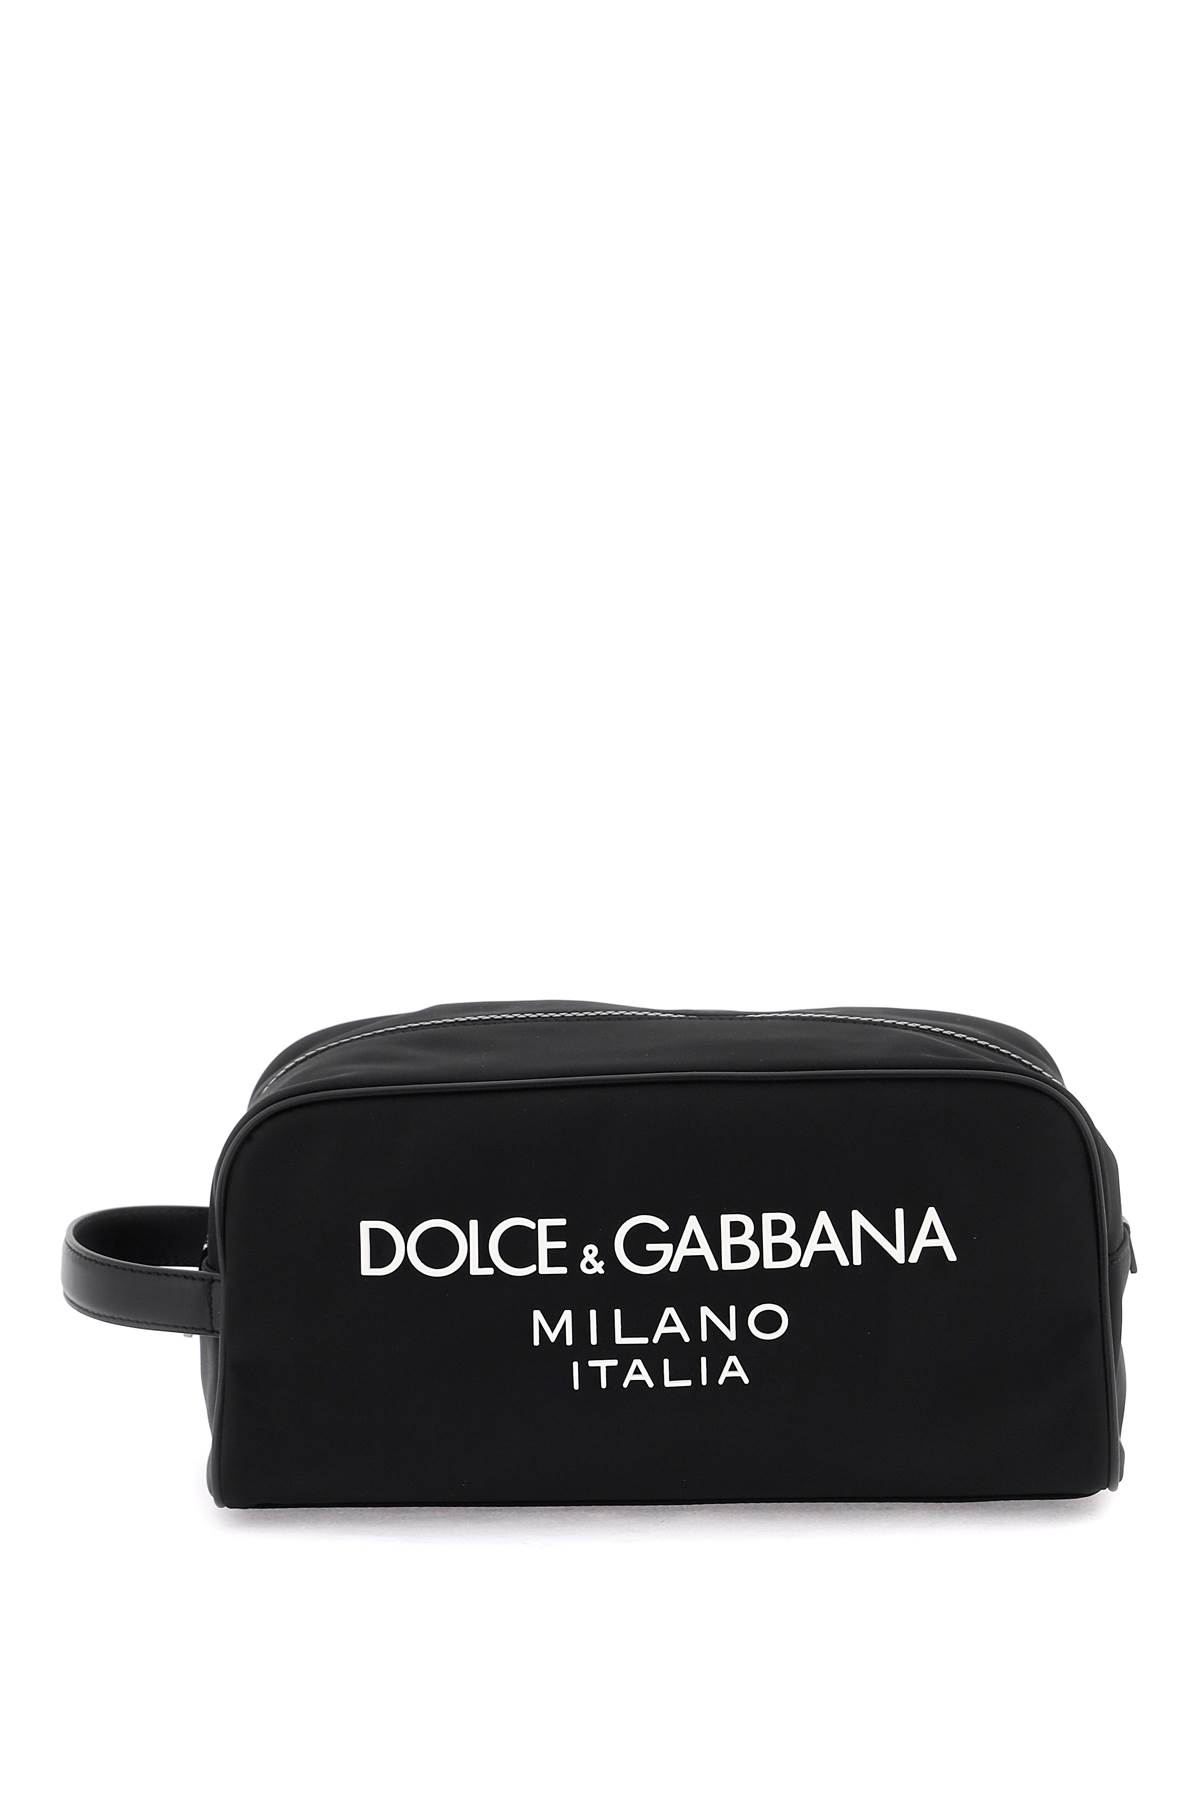 Dolce & Gabbana Nylon Cosmetic Bag